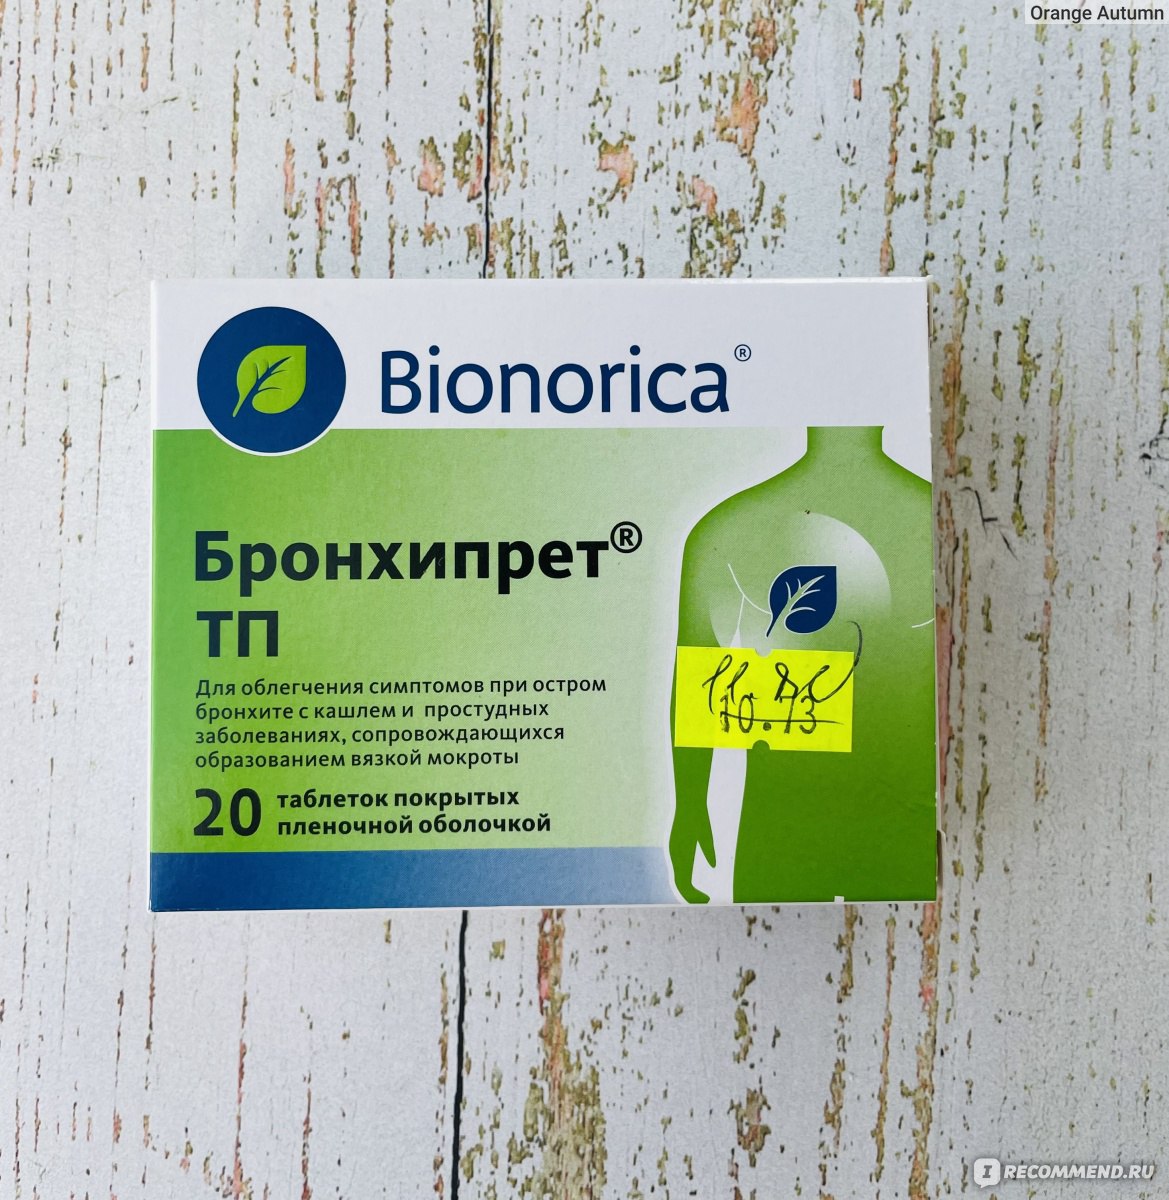 Таблетки от кашля Bionorica Бронхипрет фото